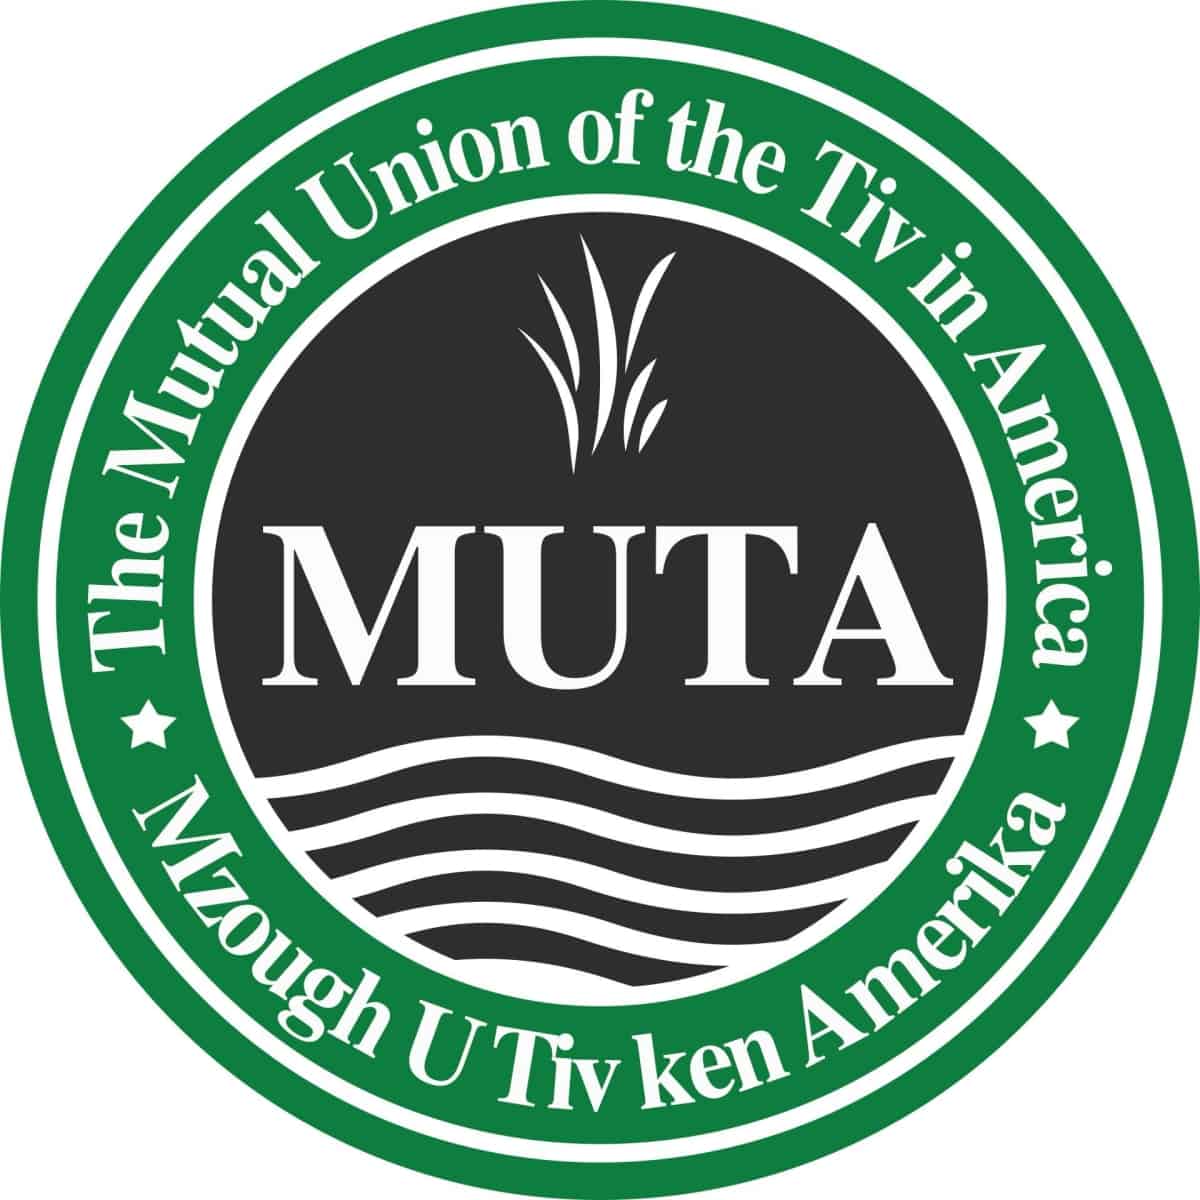 MUTA Education Undergraduate Scholarship Program